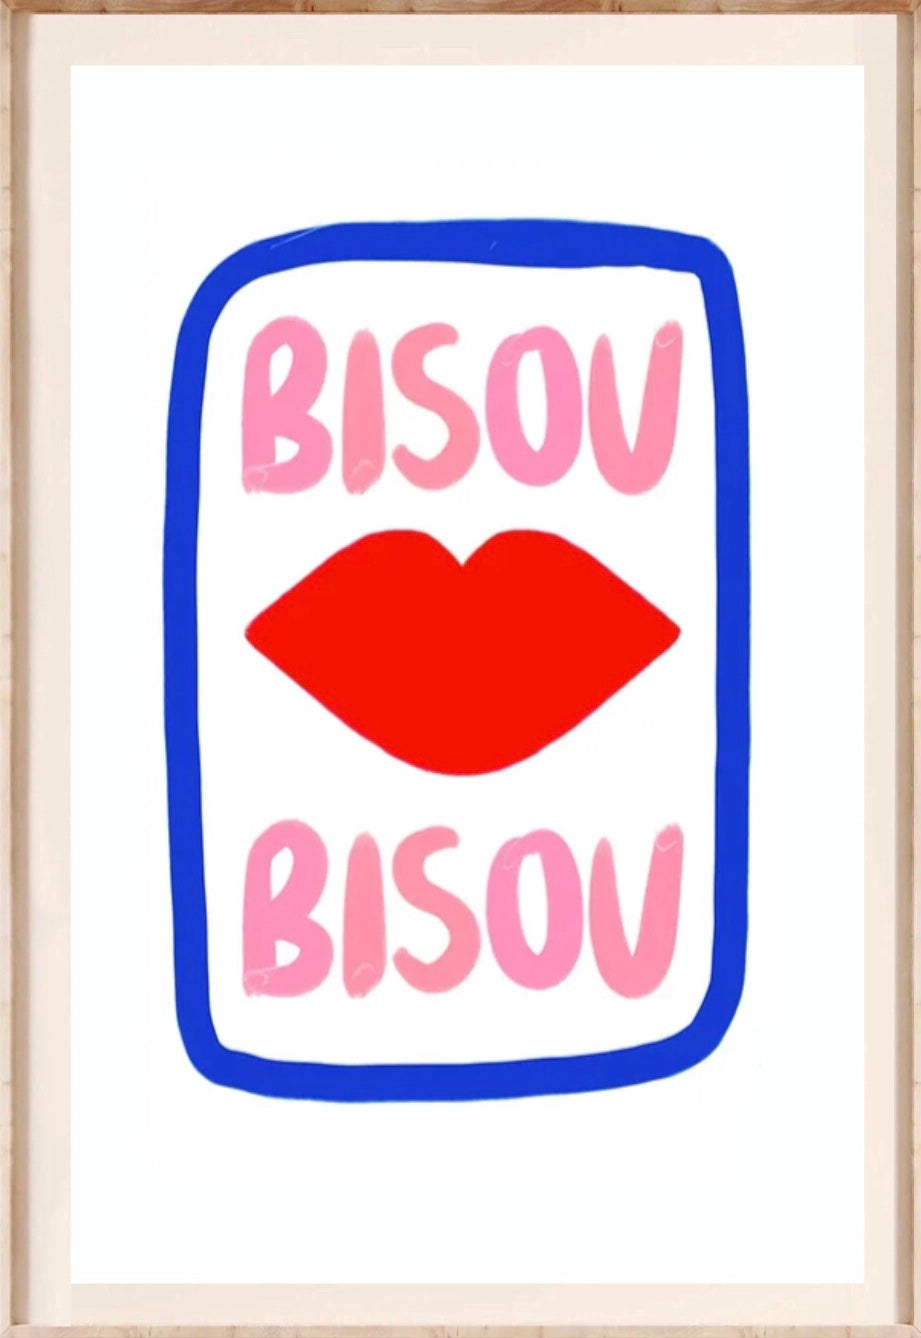 "bisou bisou " poster